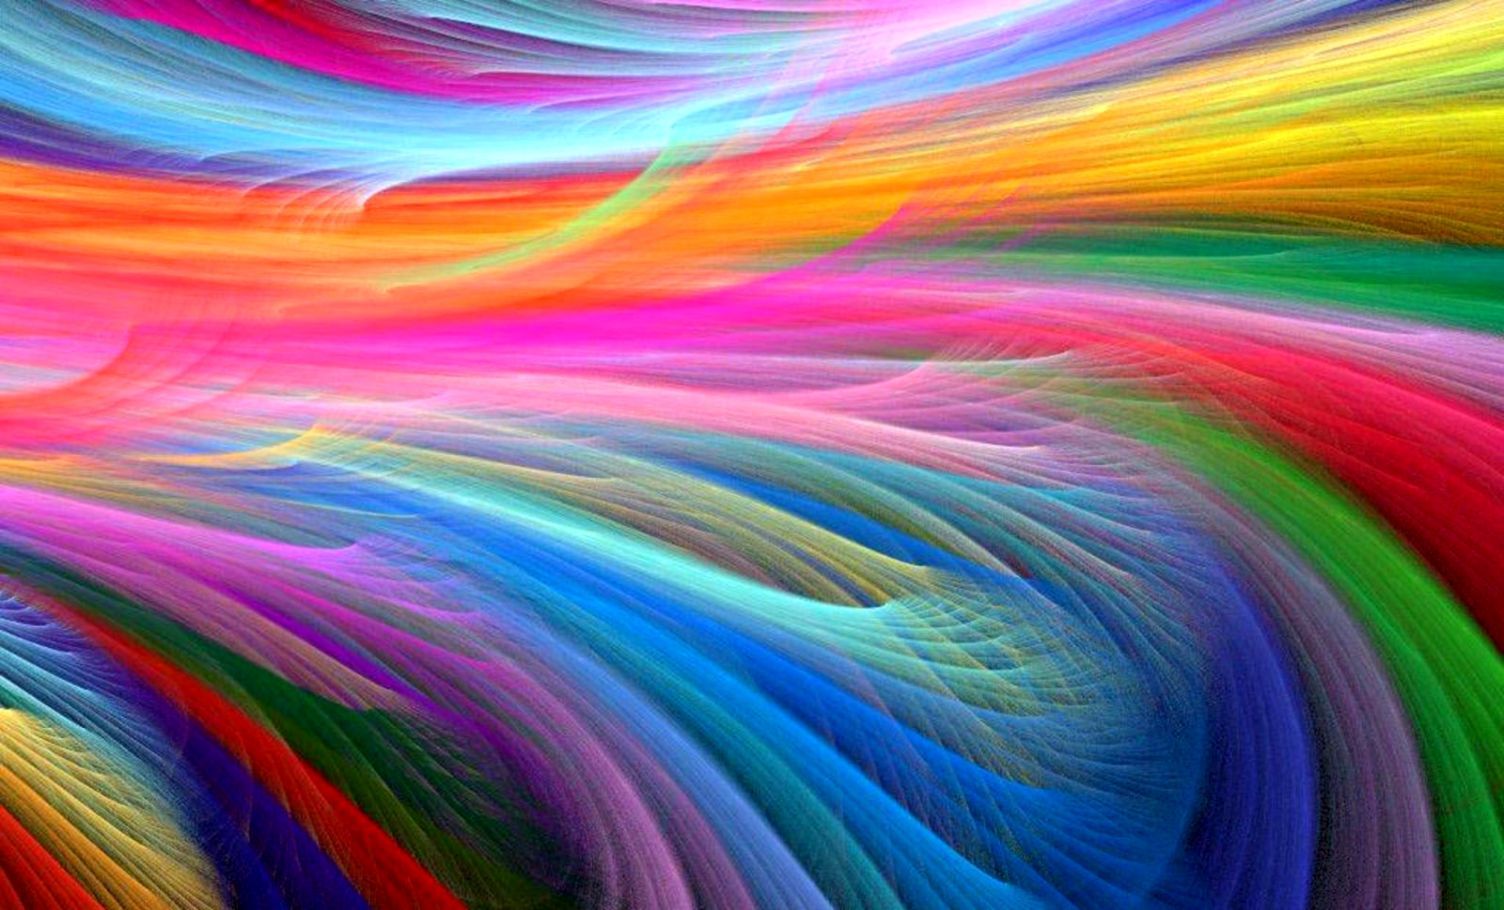 Abstract Colorful Wallpapers Hd Descarga gratuita | Wallpapers Beautiful